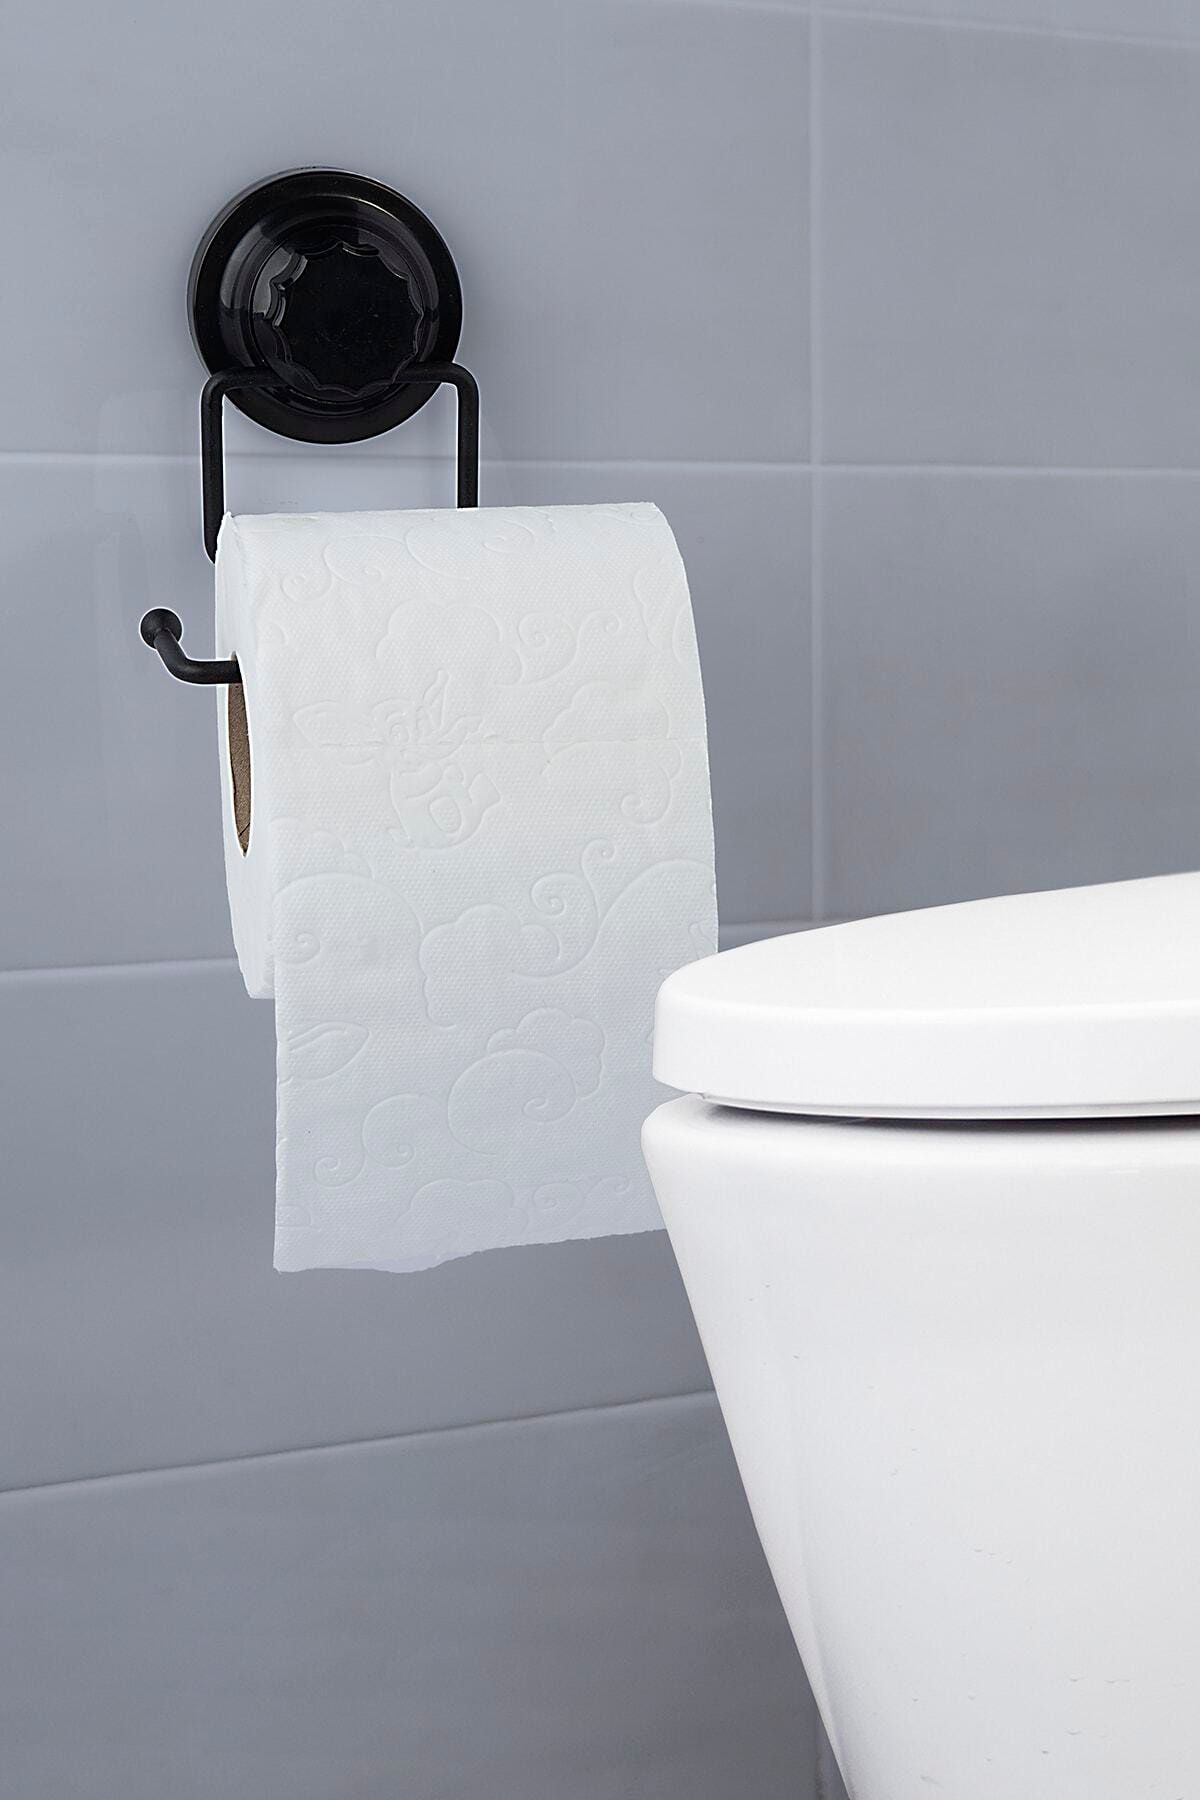 vipgross Mat Siyah Banyo Duvara Monte Tuvalet Kağıdı Tutacağı/tuvalet Kağıtlık Vs703 - M3